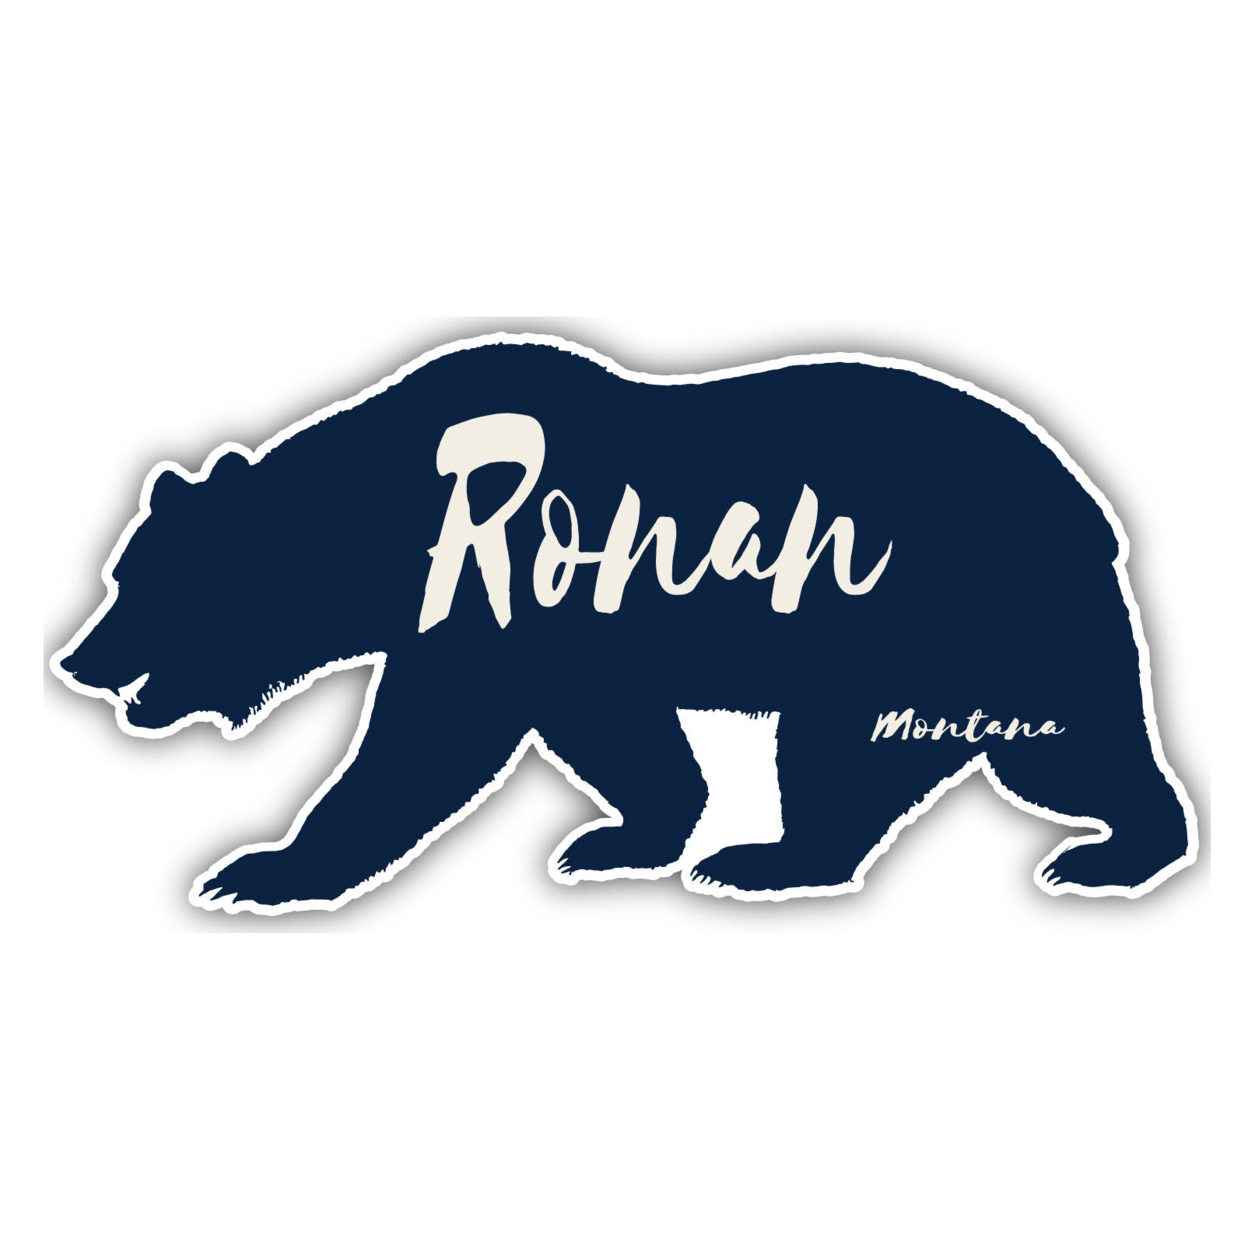 Ronan Montana Souvenir Decorative Stickers (Choose Theme And Size) - Single Unit, 4-Inch, Bear